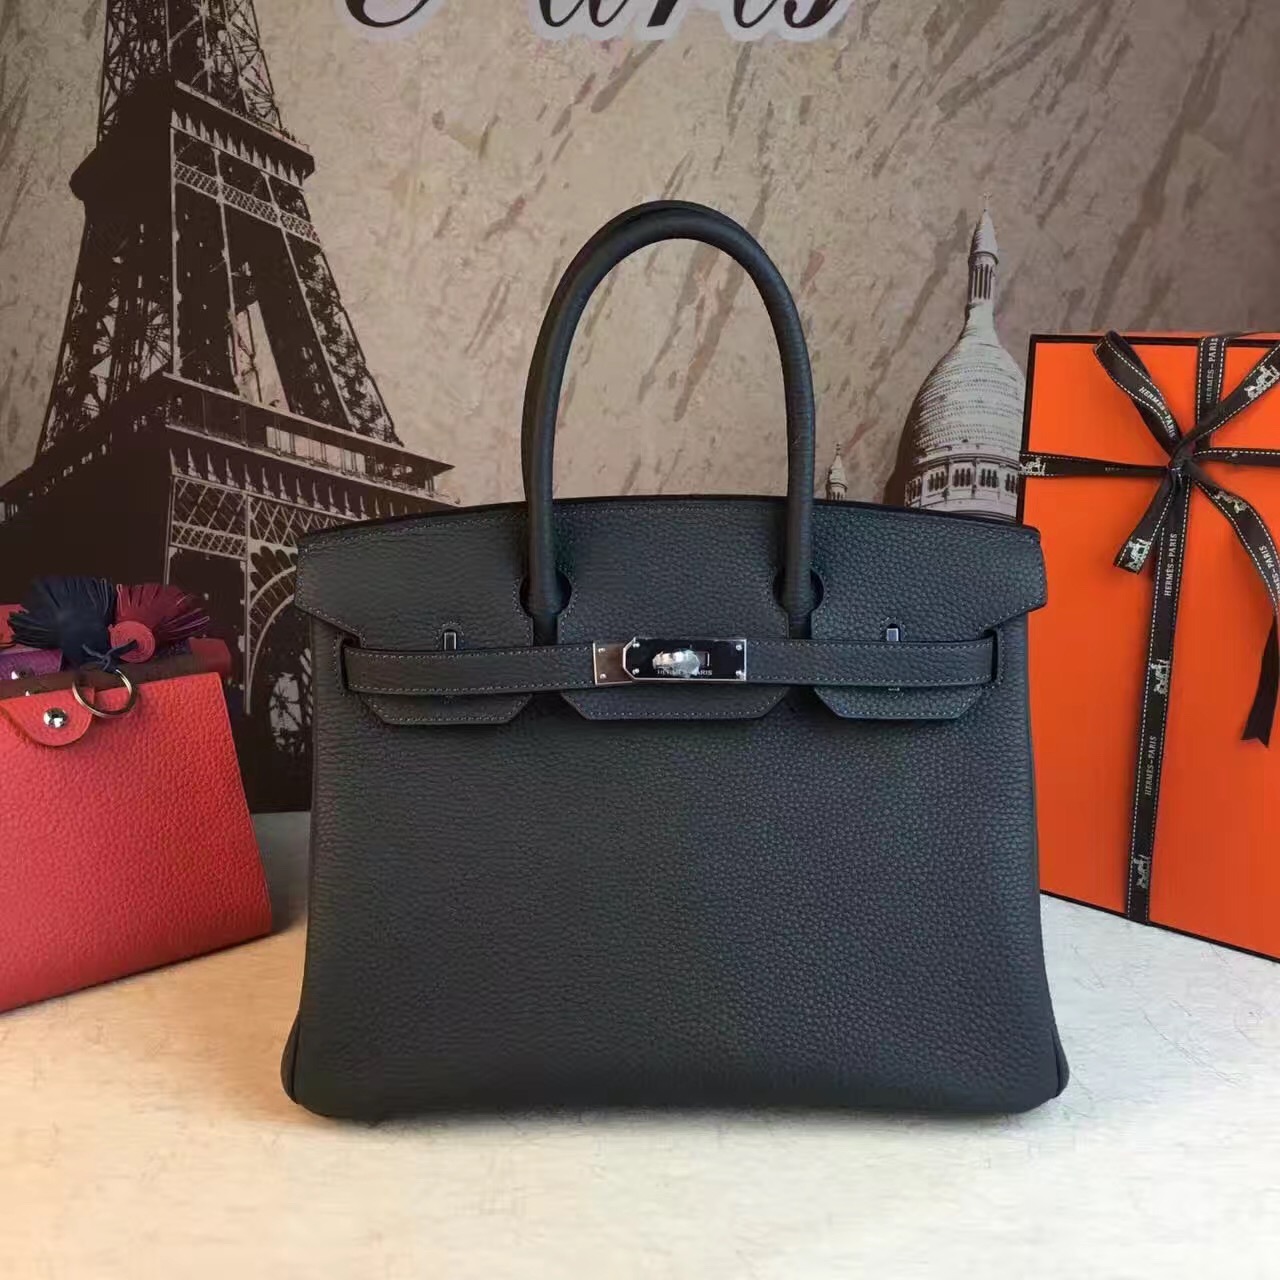 Hermes Birkin top leather black handbags